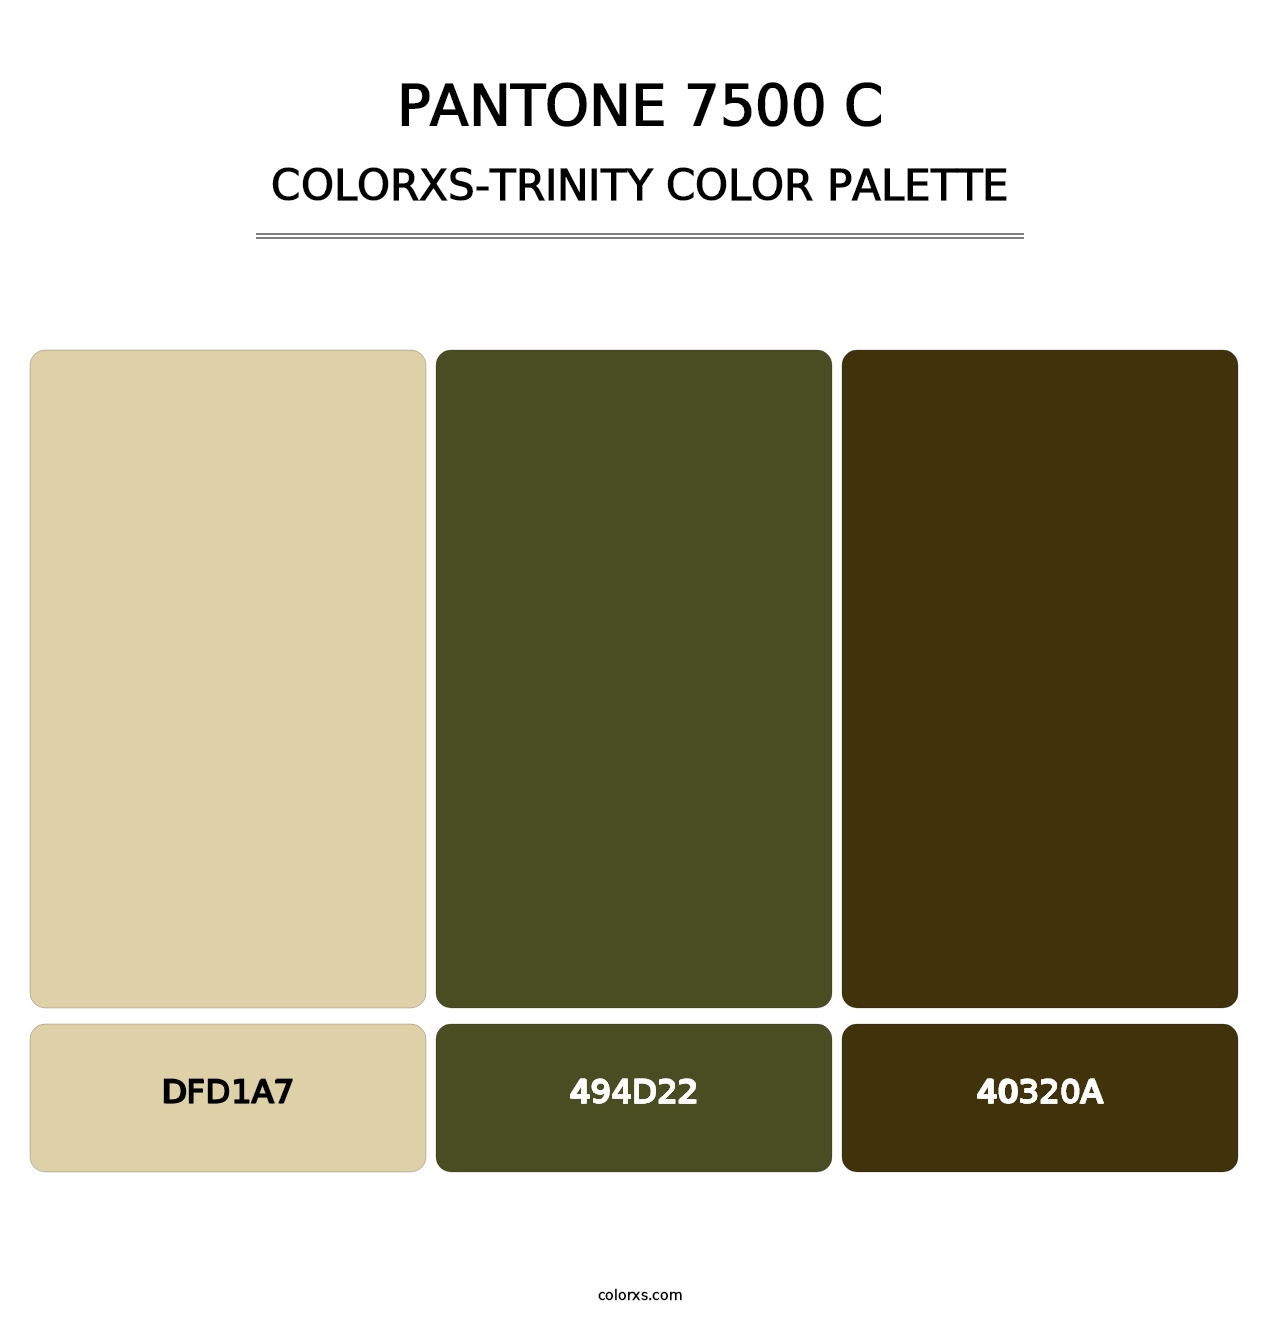 PANTONE 7500 C - Colorxs Trinity Palette